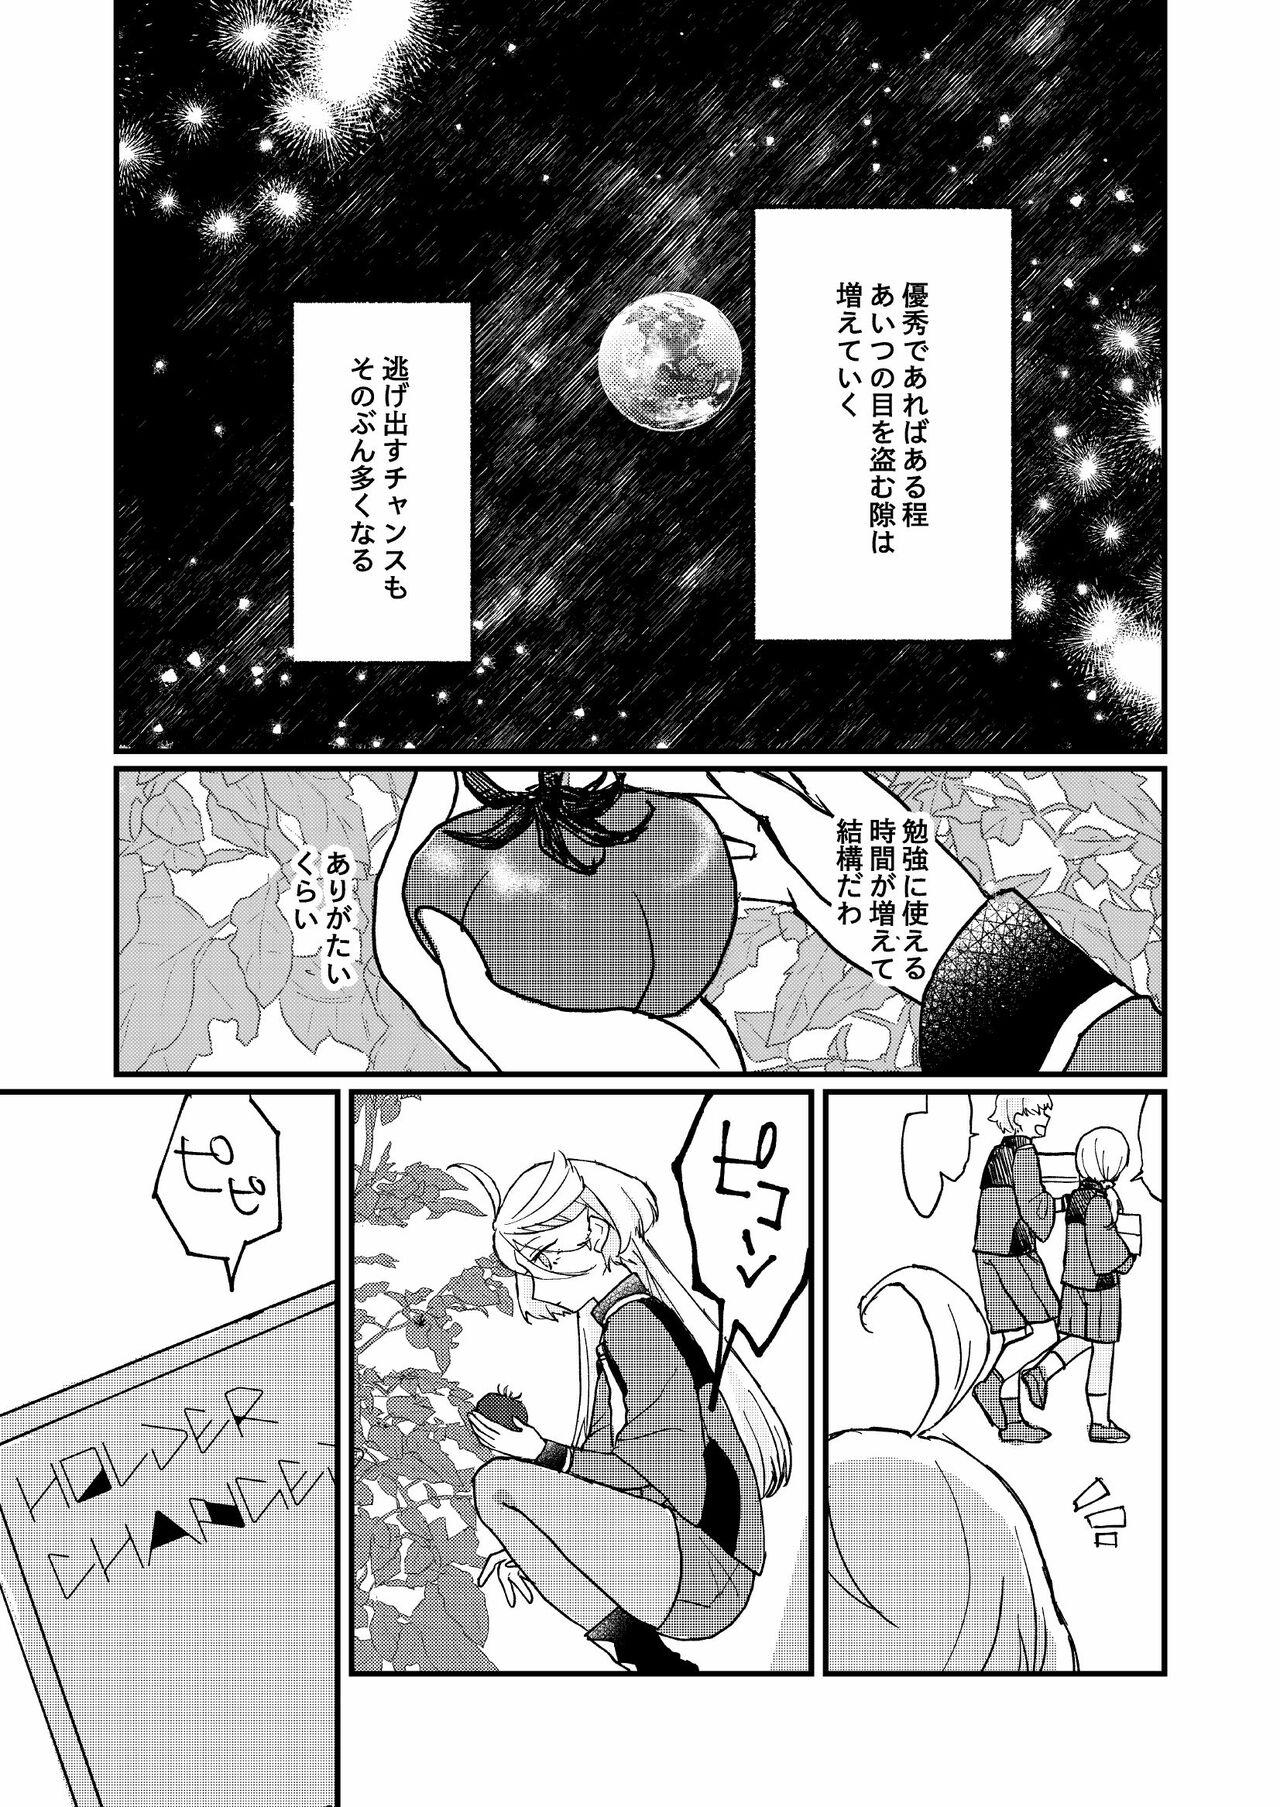 Kinky Mizu no Hoshi yori Ai o Komete - Mobile suit gundam the witch from mercury Pau - Page 5